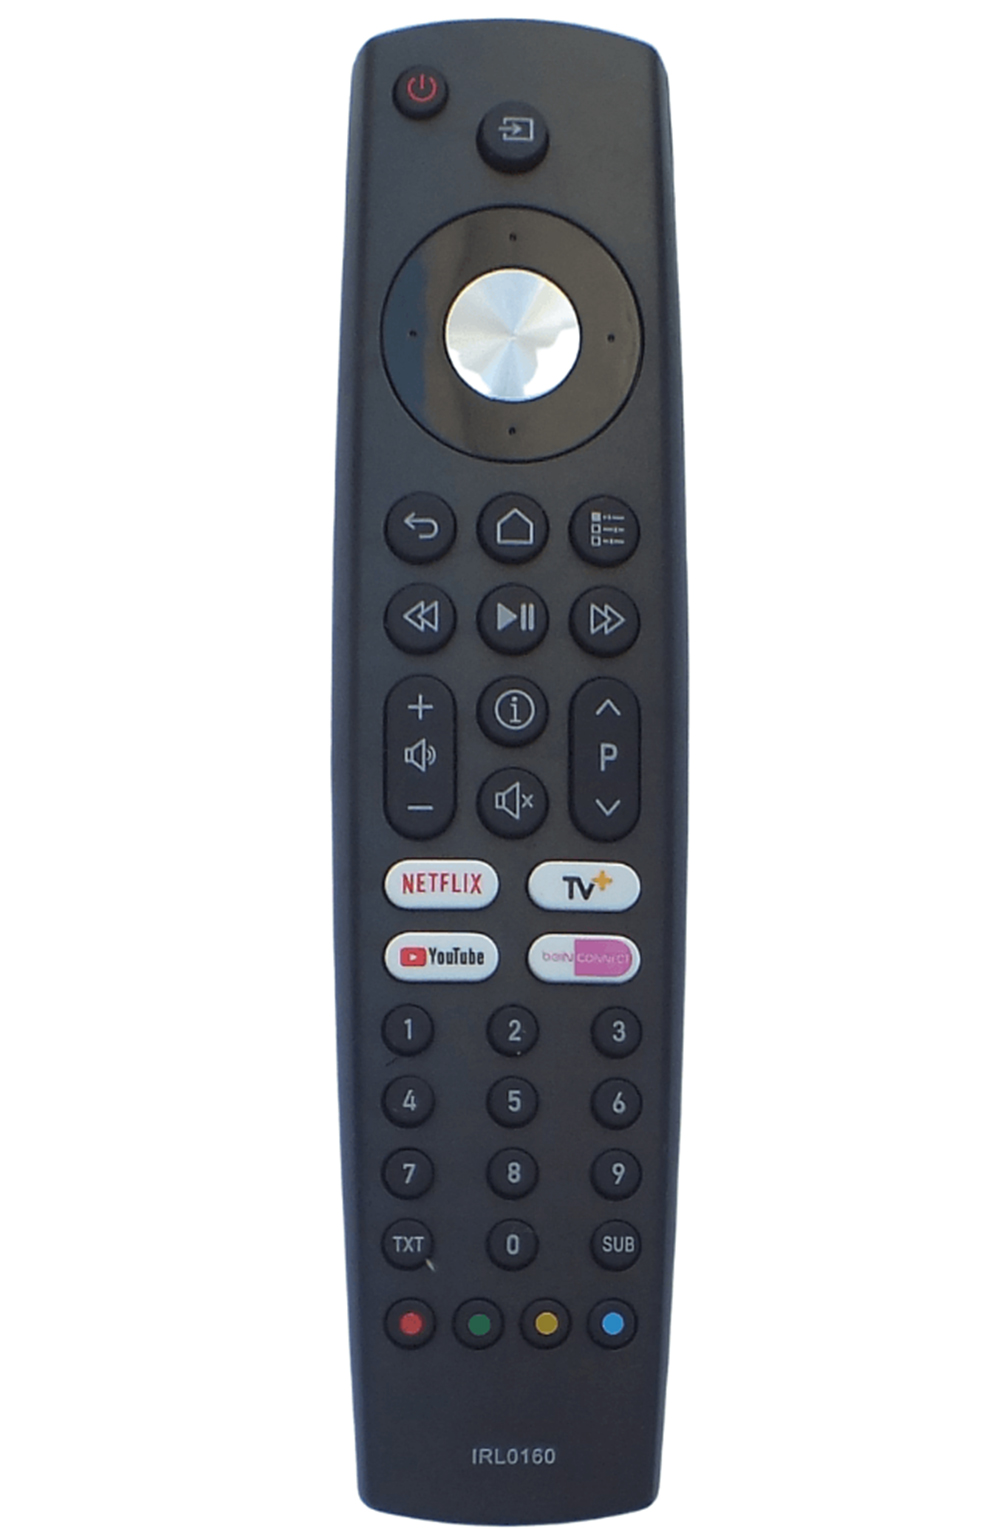 Bestoclass Premium Product Sihirli   Arçeli̇k A65 A 850 B TV Kumandası - IRL0160